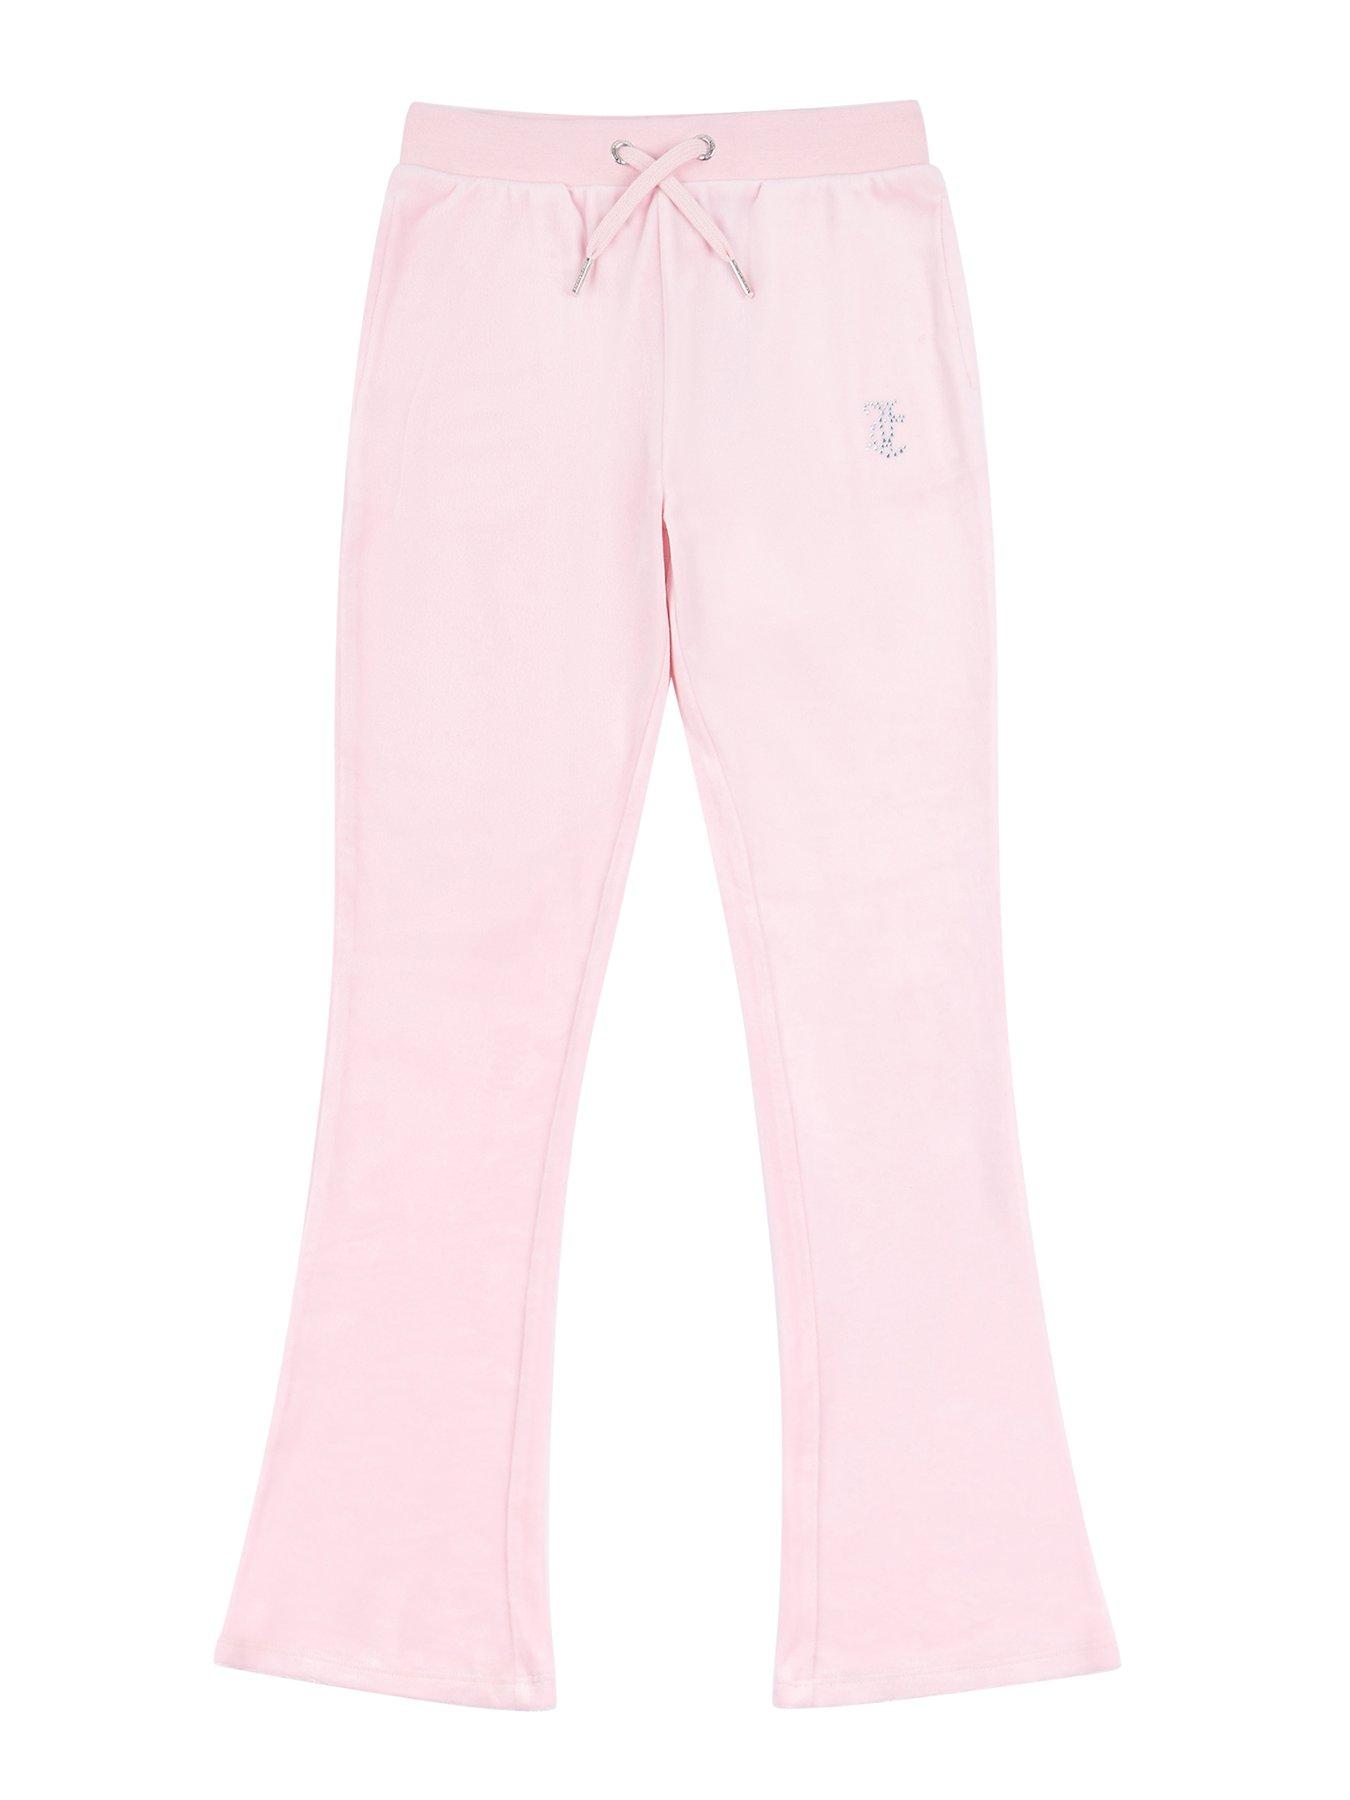 Womens Baby Pink Velour Pants, Sweatpants